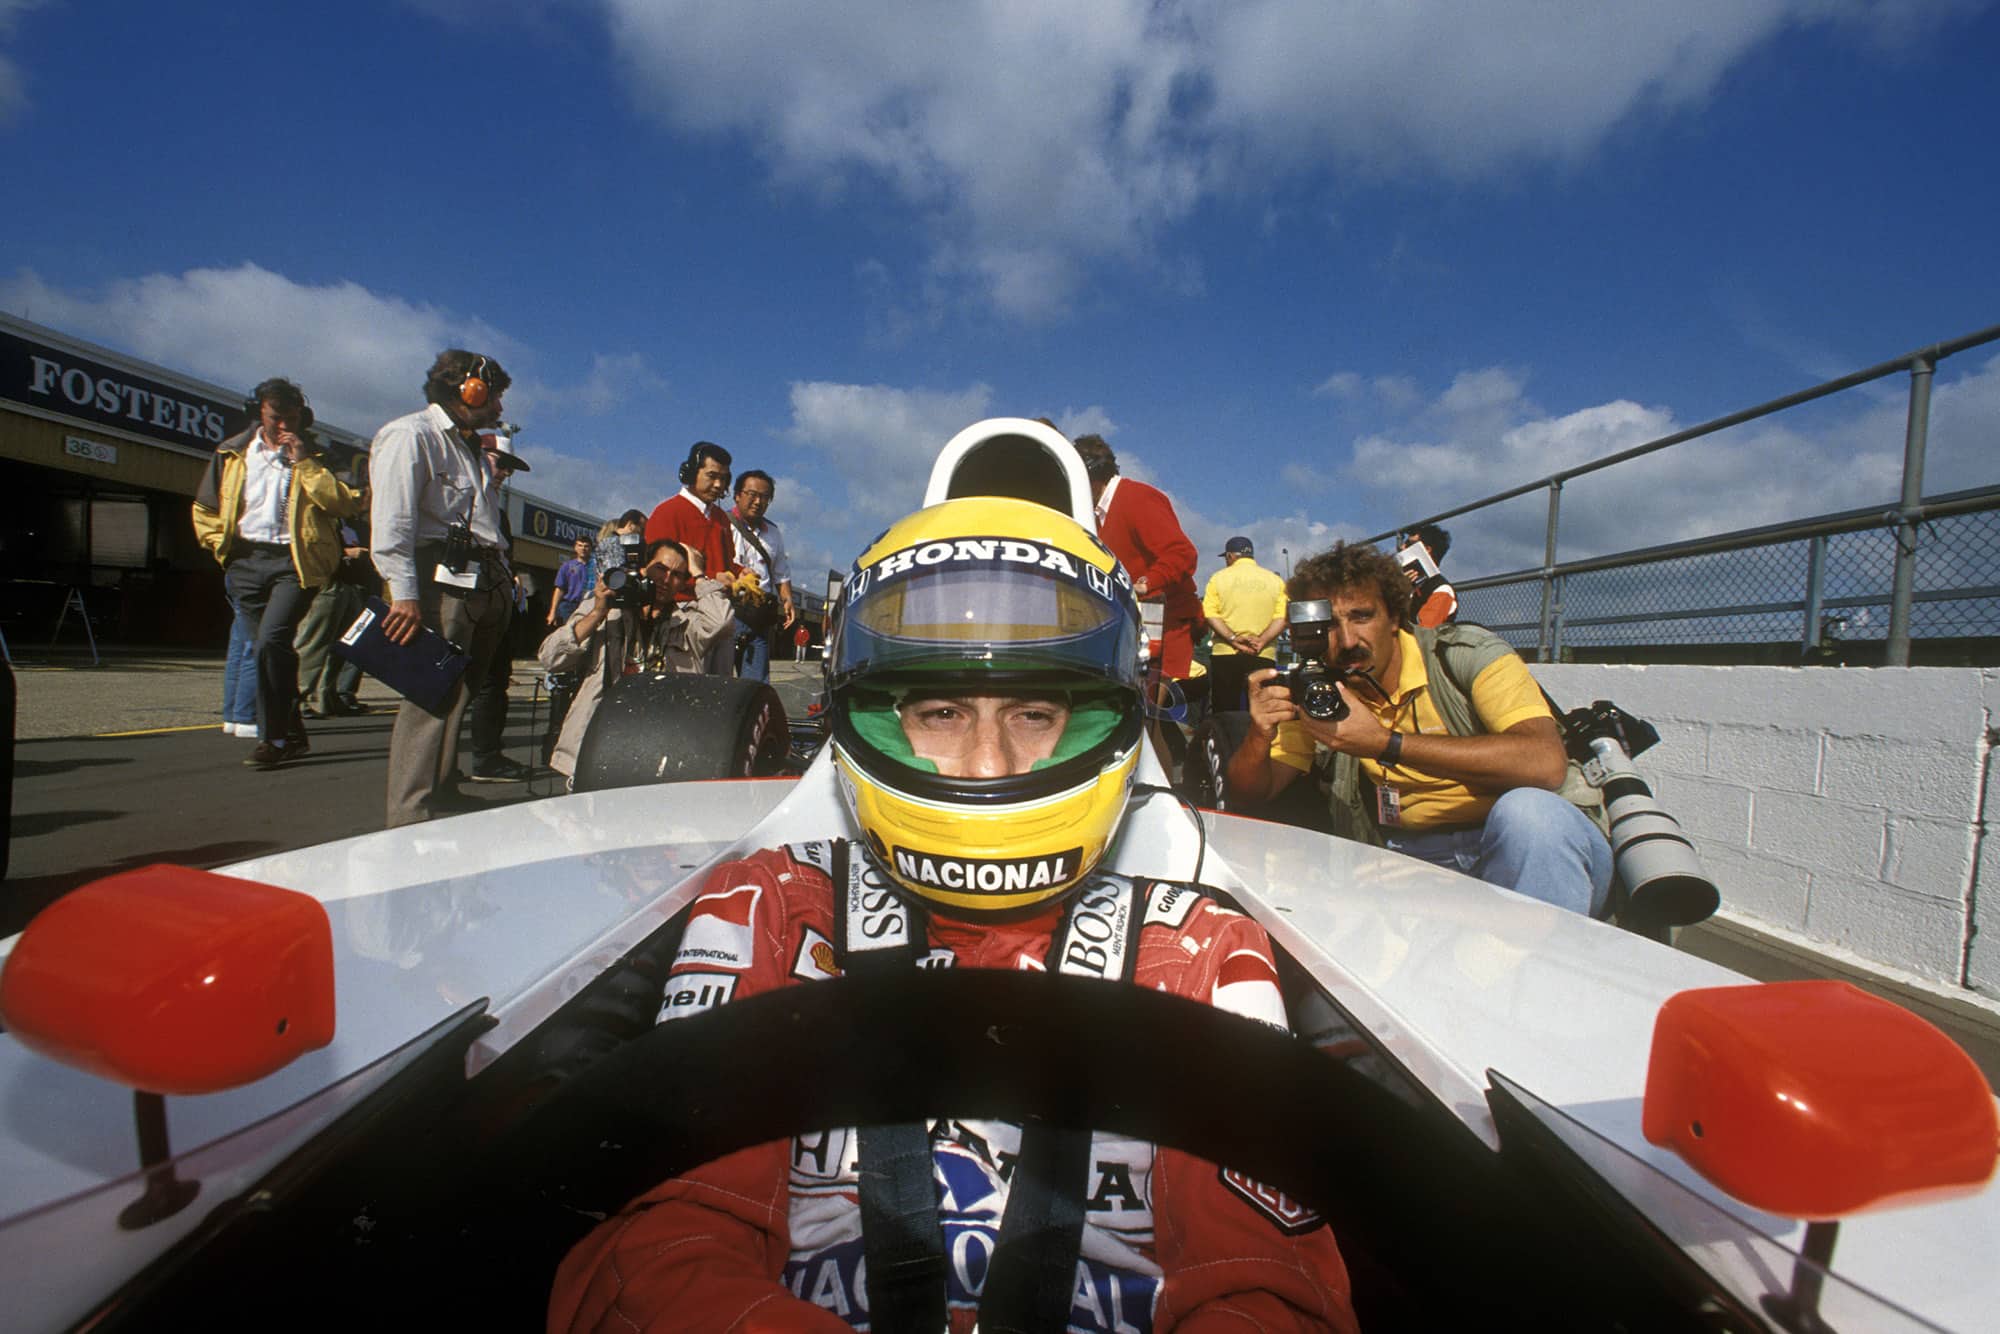 Ayrton Senna's first Grand Prix winning Lotus back on track